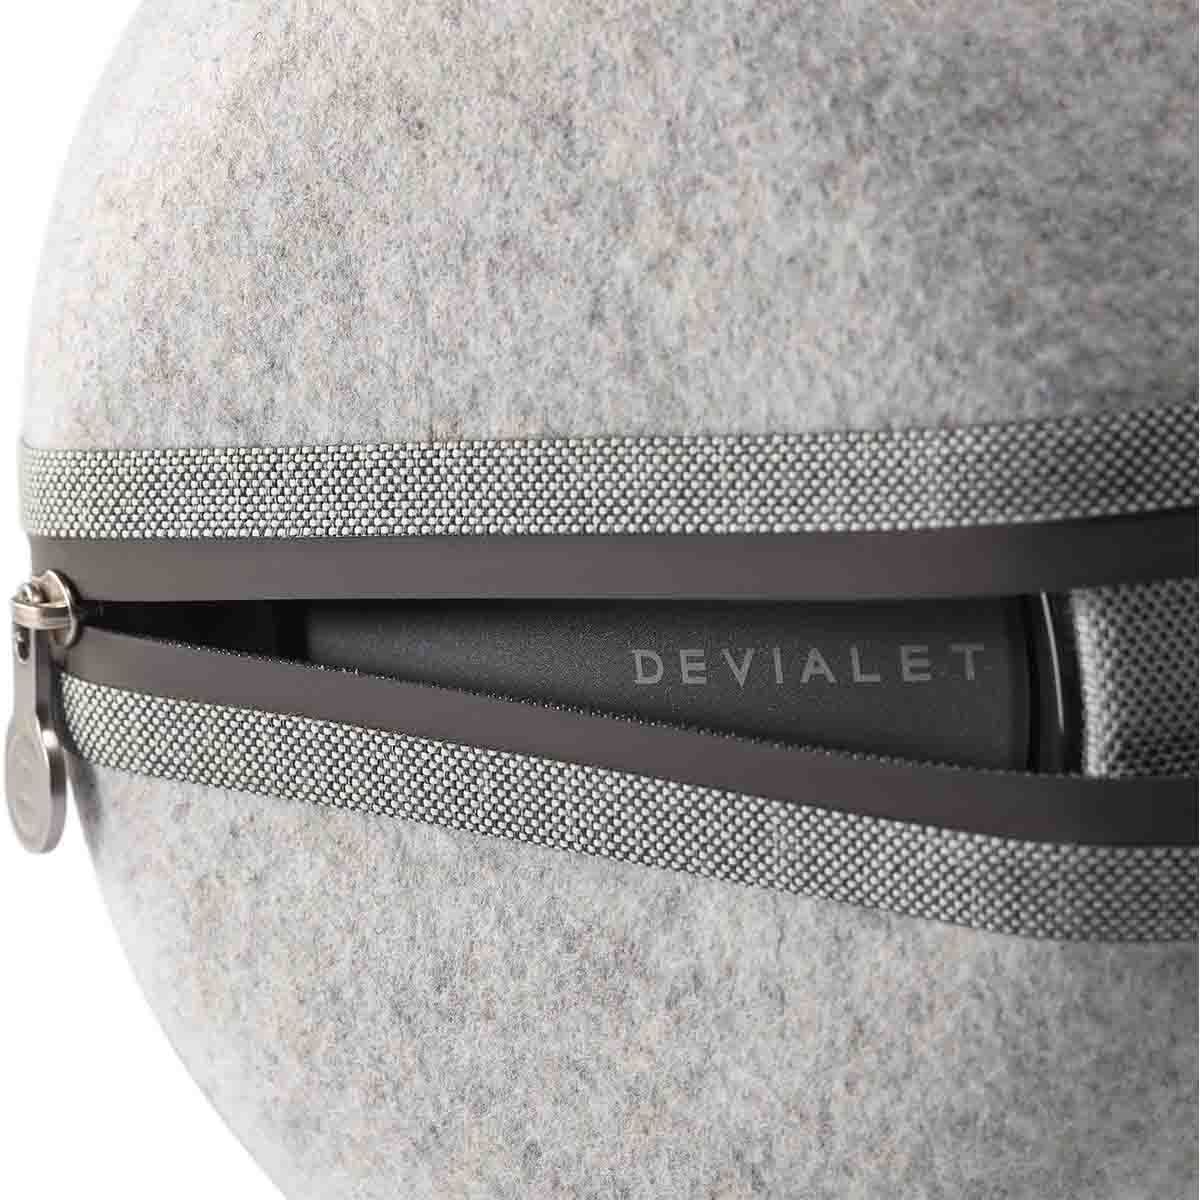 Devialet Mania Cocoon Light Grey - close-up of Devialet logo